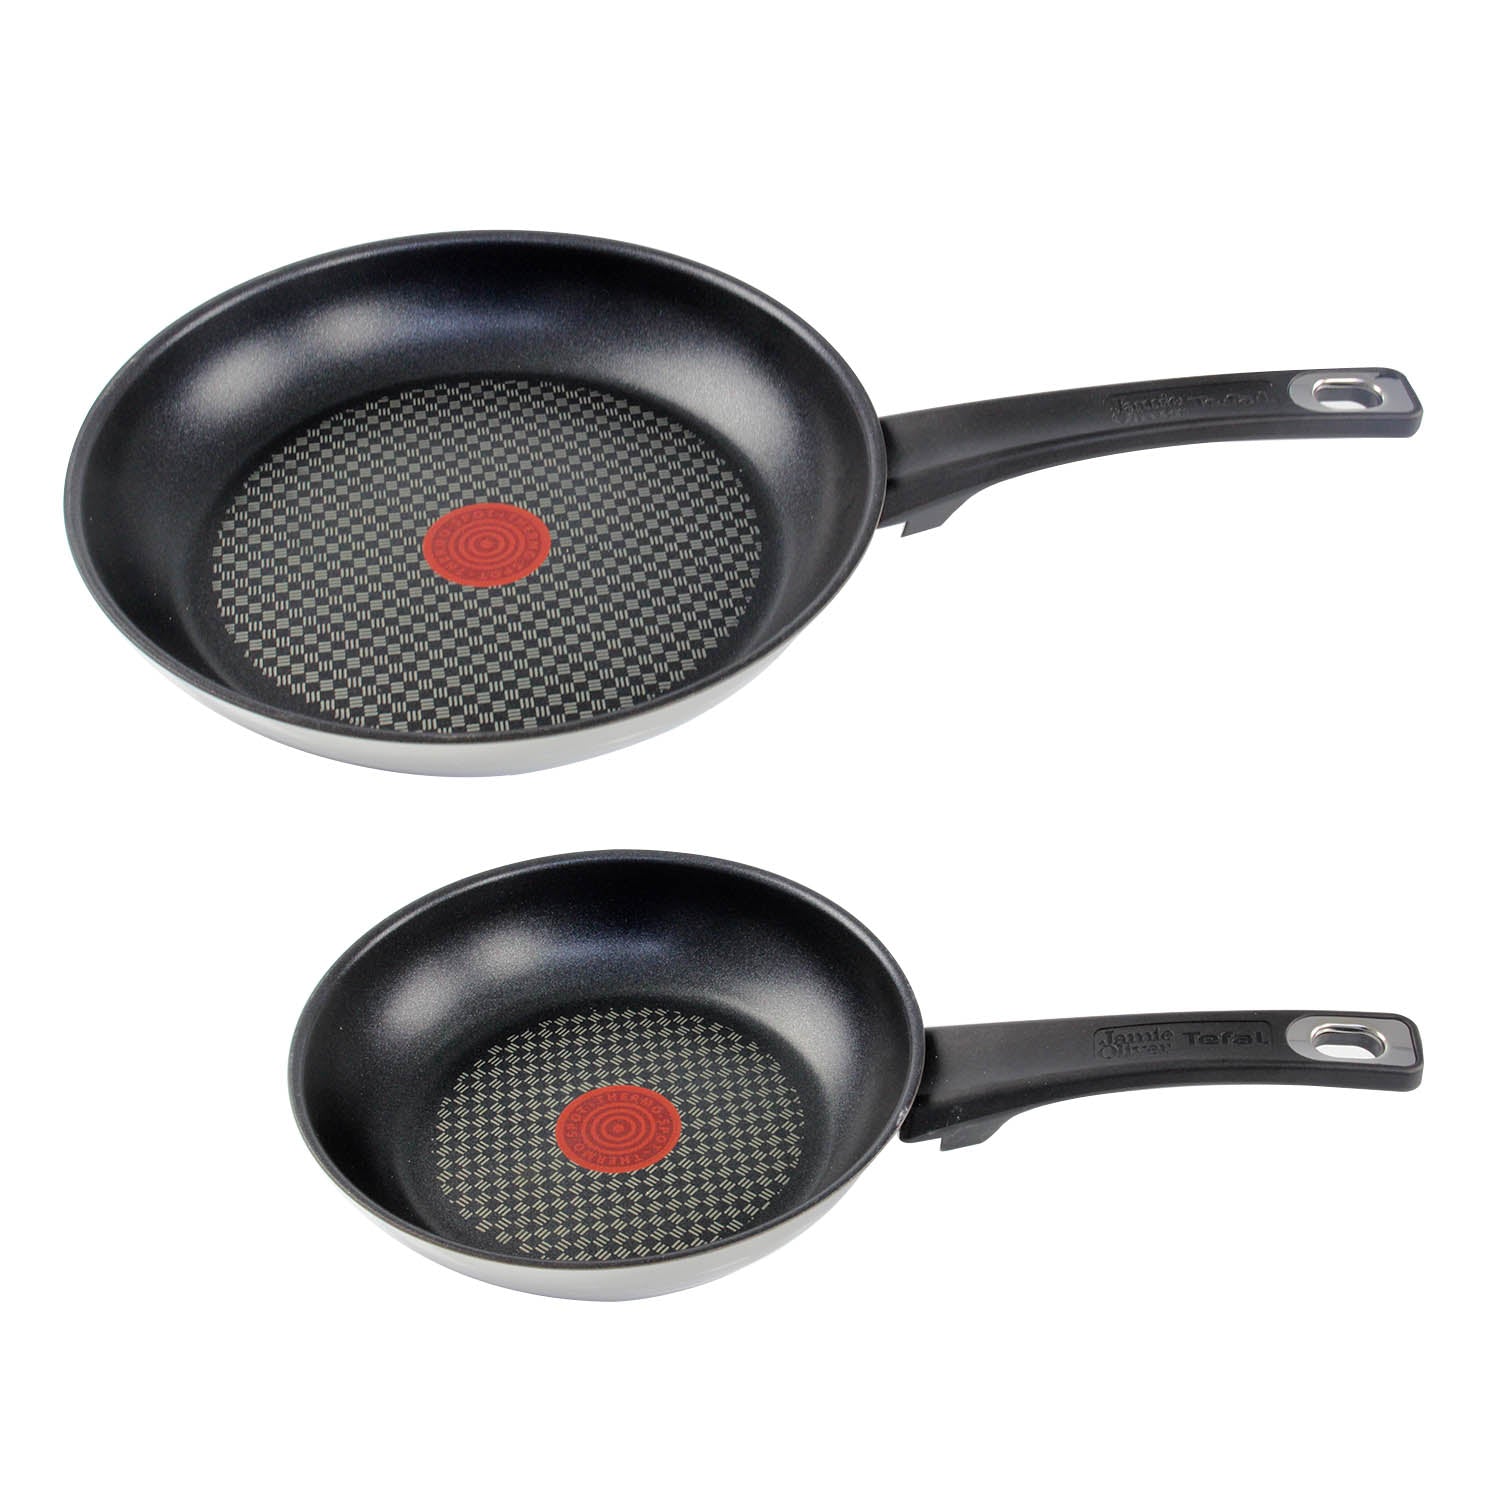 Tefal Jamie Oliver 20 & 26 cm Non-stick Frying Pans Twin Set